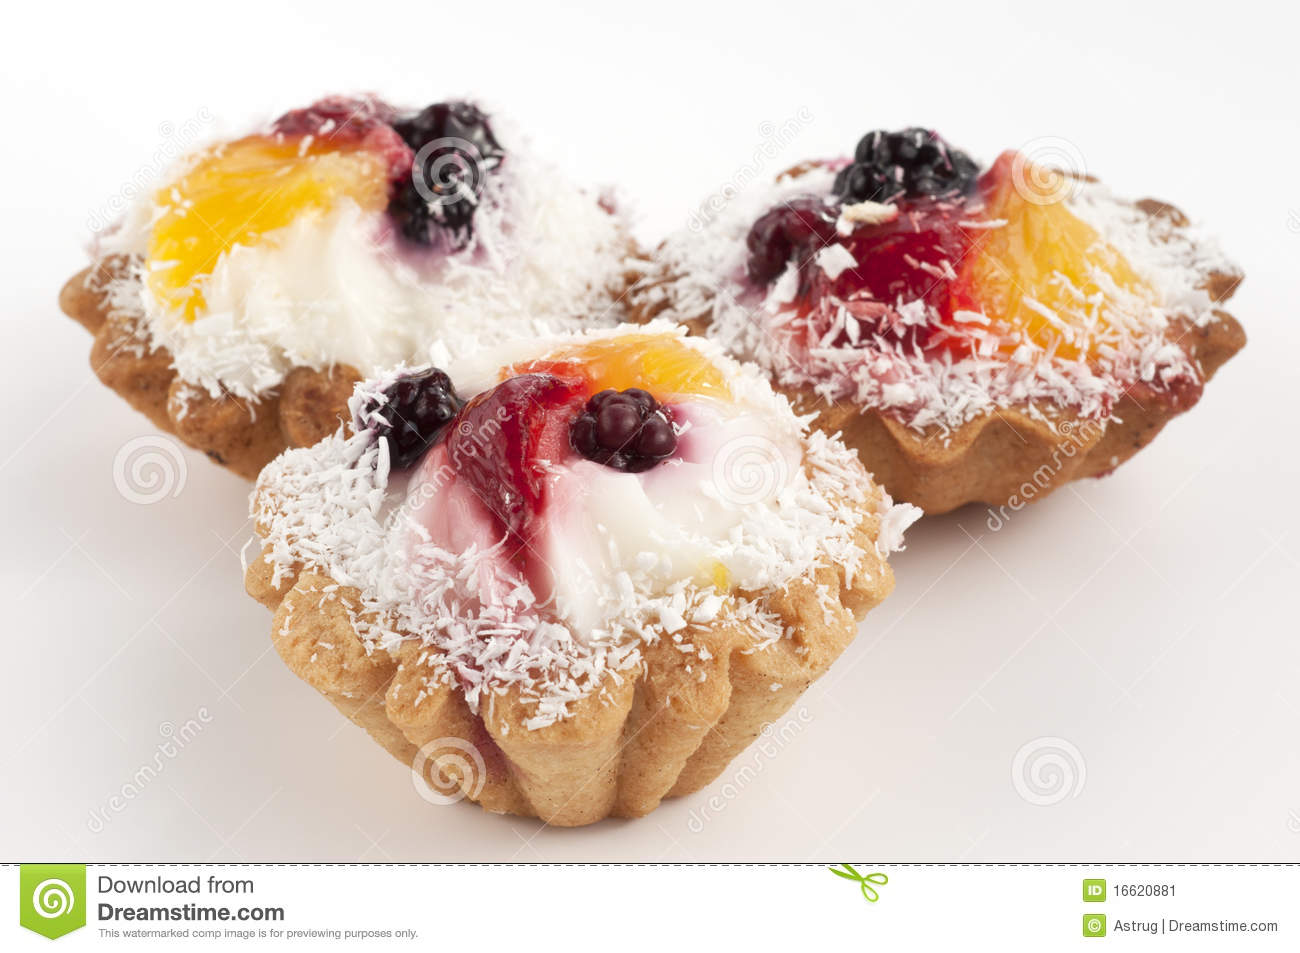 Fruit Pies Stock Image   Image  16620881